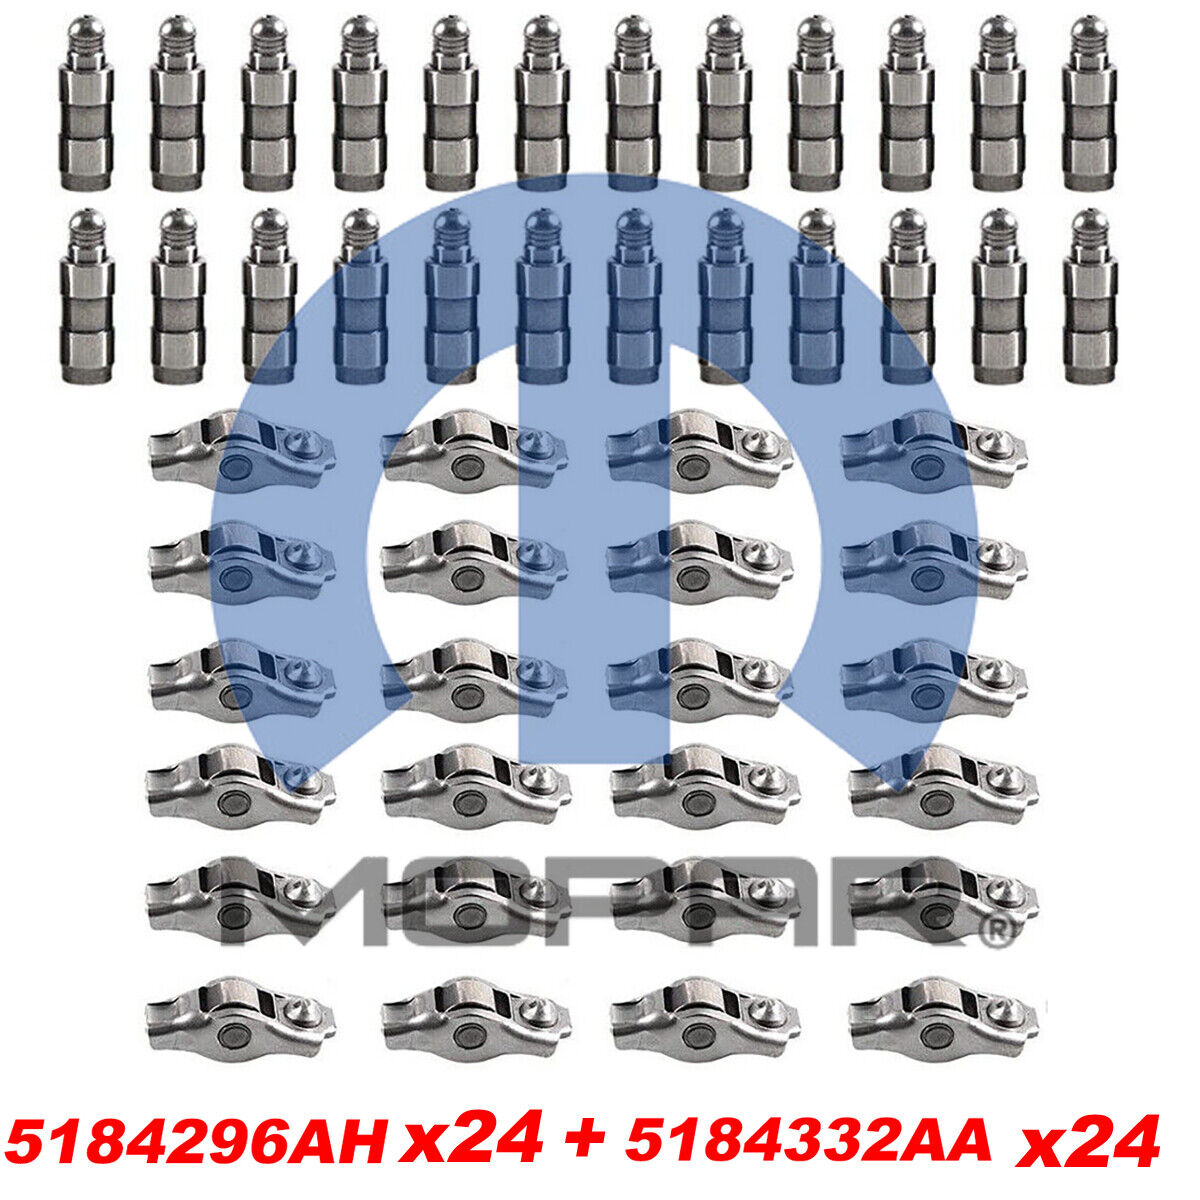 Mopar 24Pcs 5184296AH Arms + 24Pcs 5184332AA Lifter for 11-19 Dodge Ram Chrysler